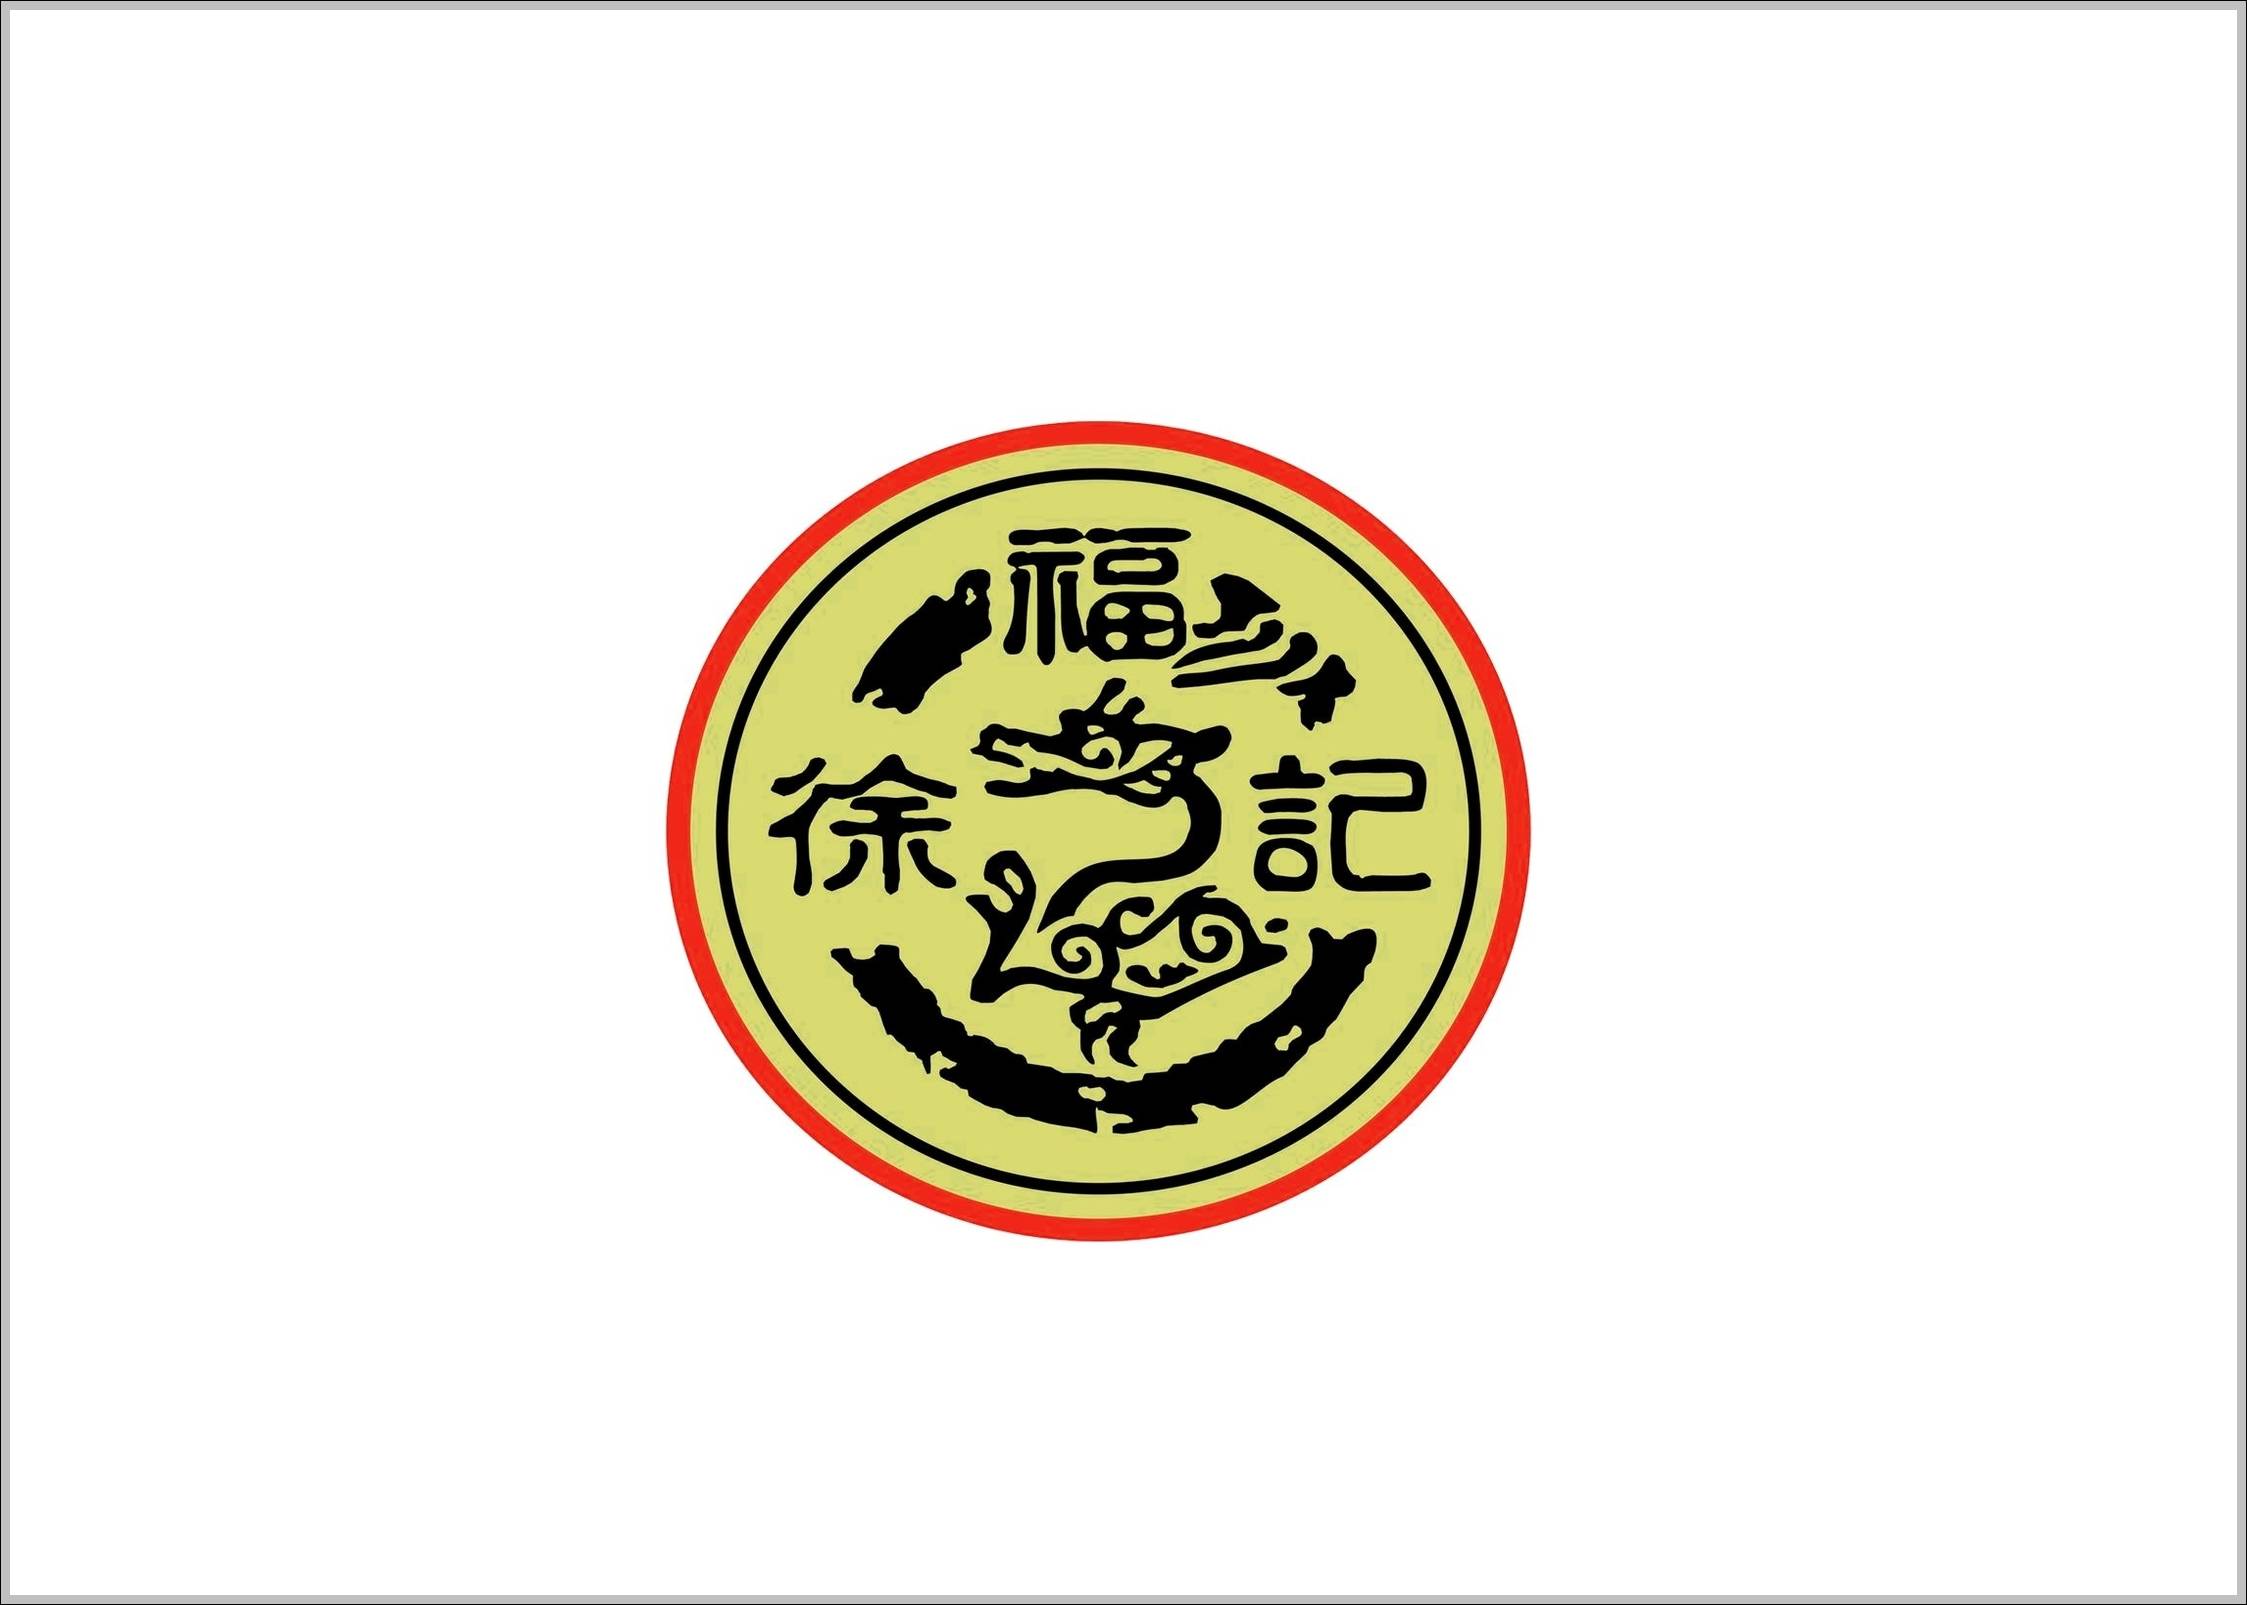 Hsu Logo - Hsu Fu Chi logo | Logo Sign - Logos, Signs, Symbols, Trademarks of ...